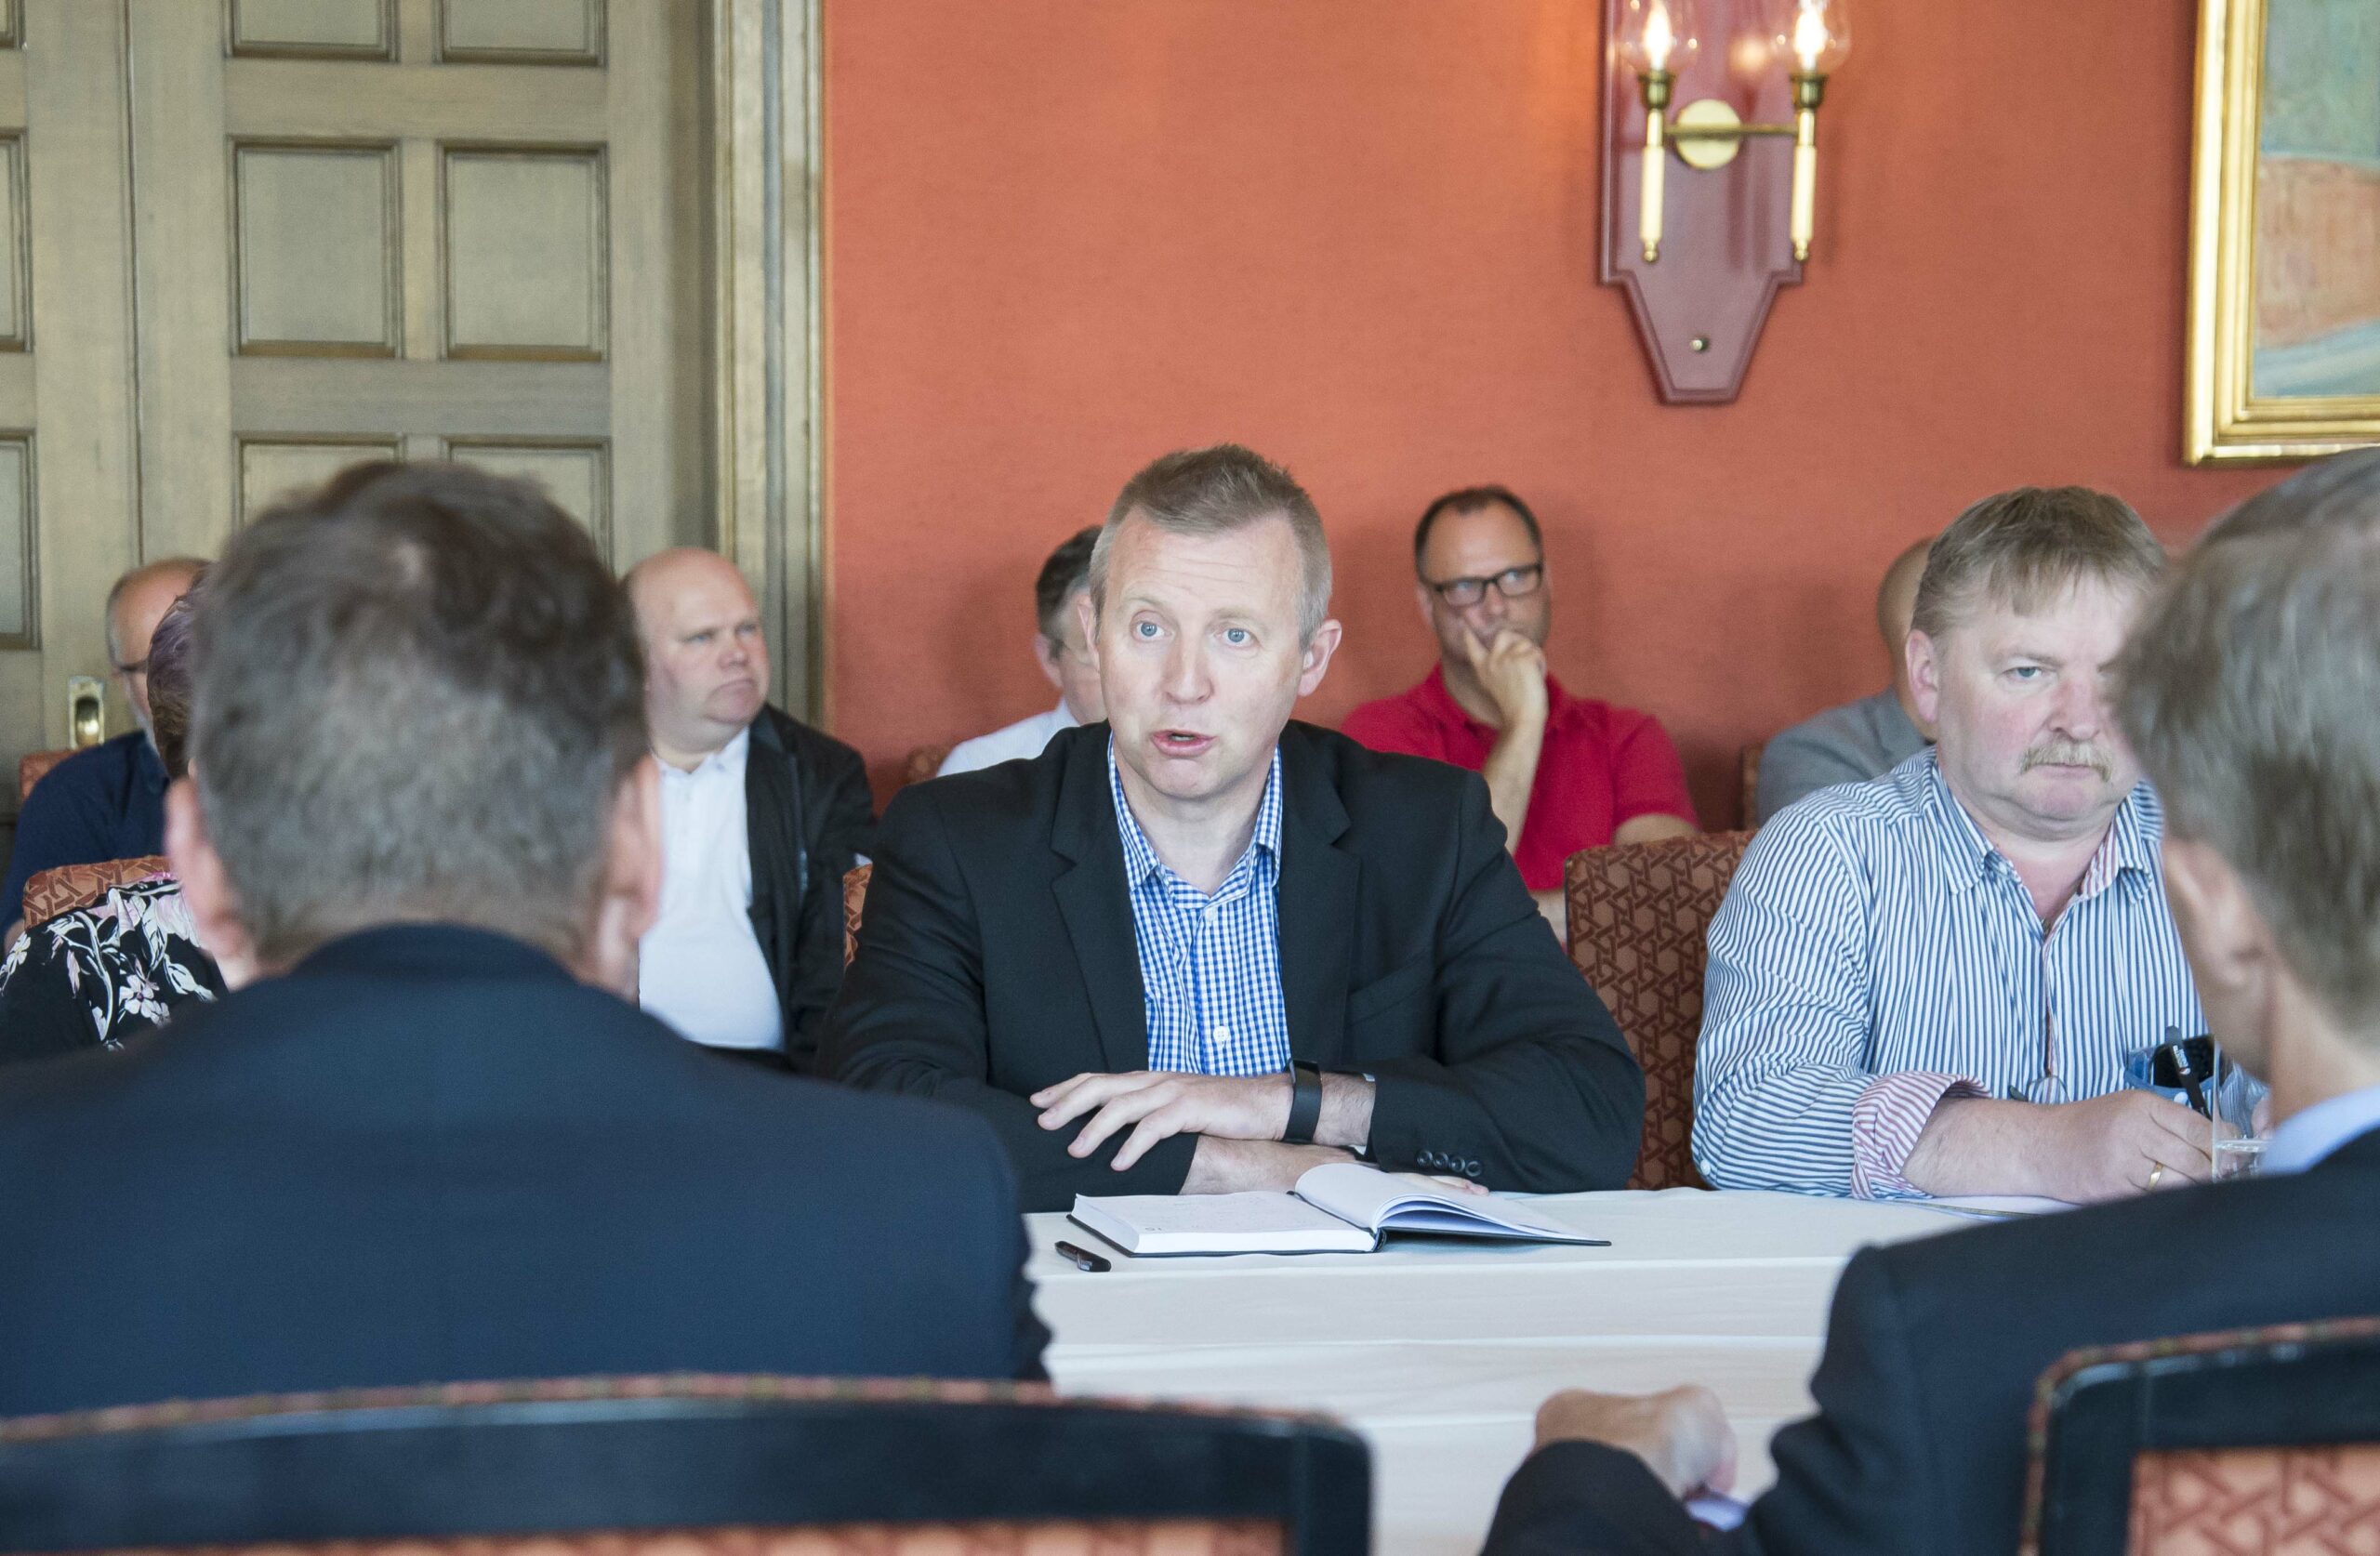 Forbundsleder Frode Alfheim leder Industri Energis forhandlingsutvalg. Foto: Atle Espen Helgesen